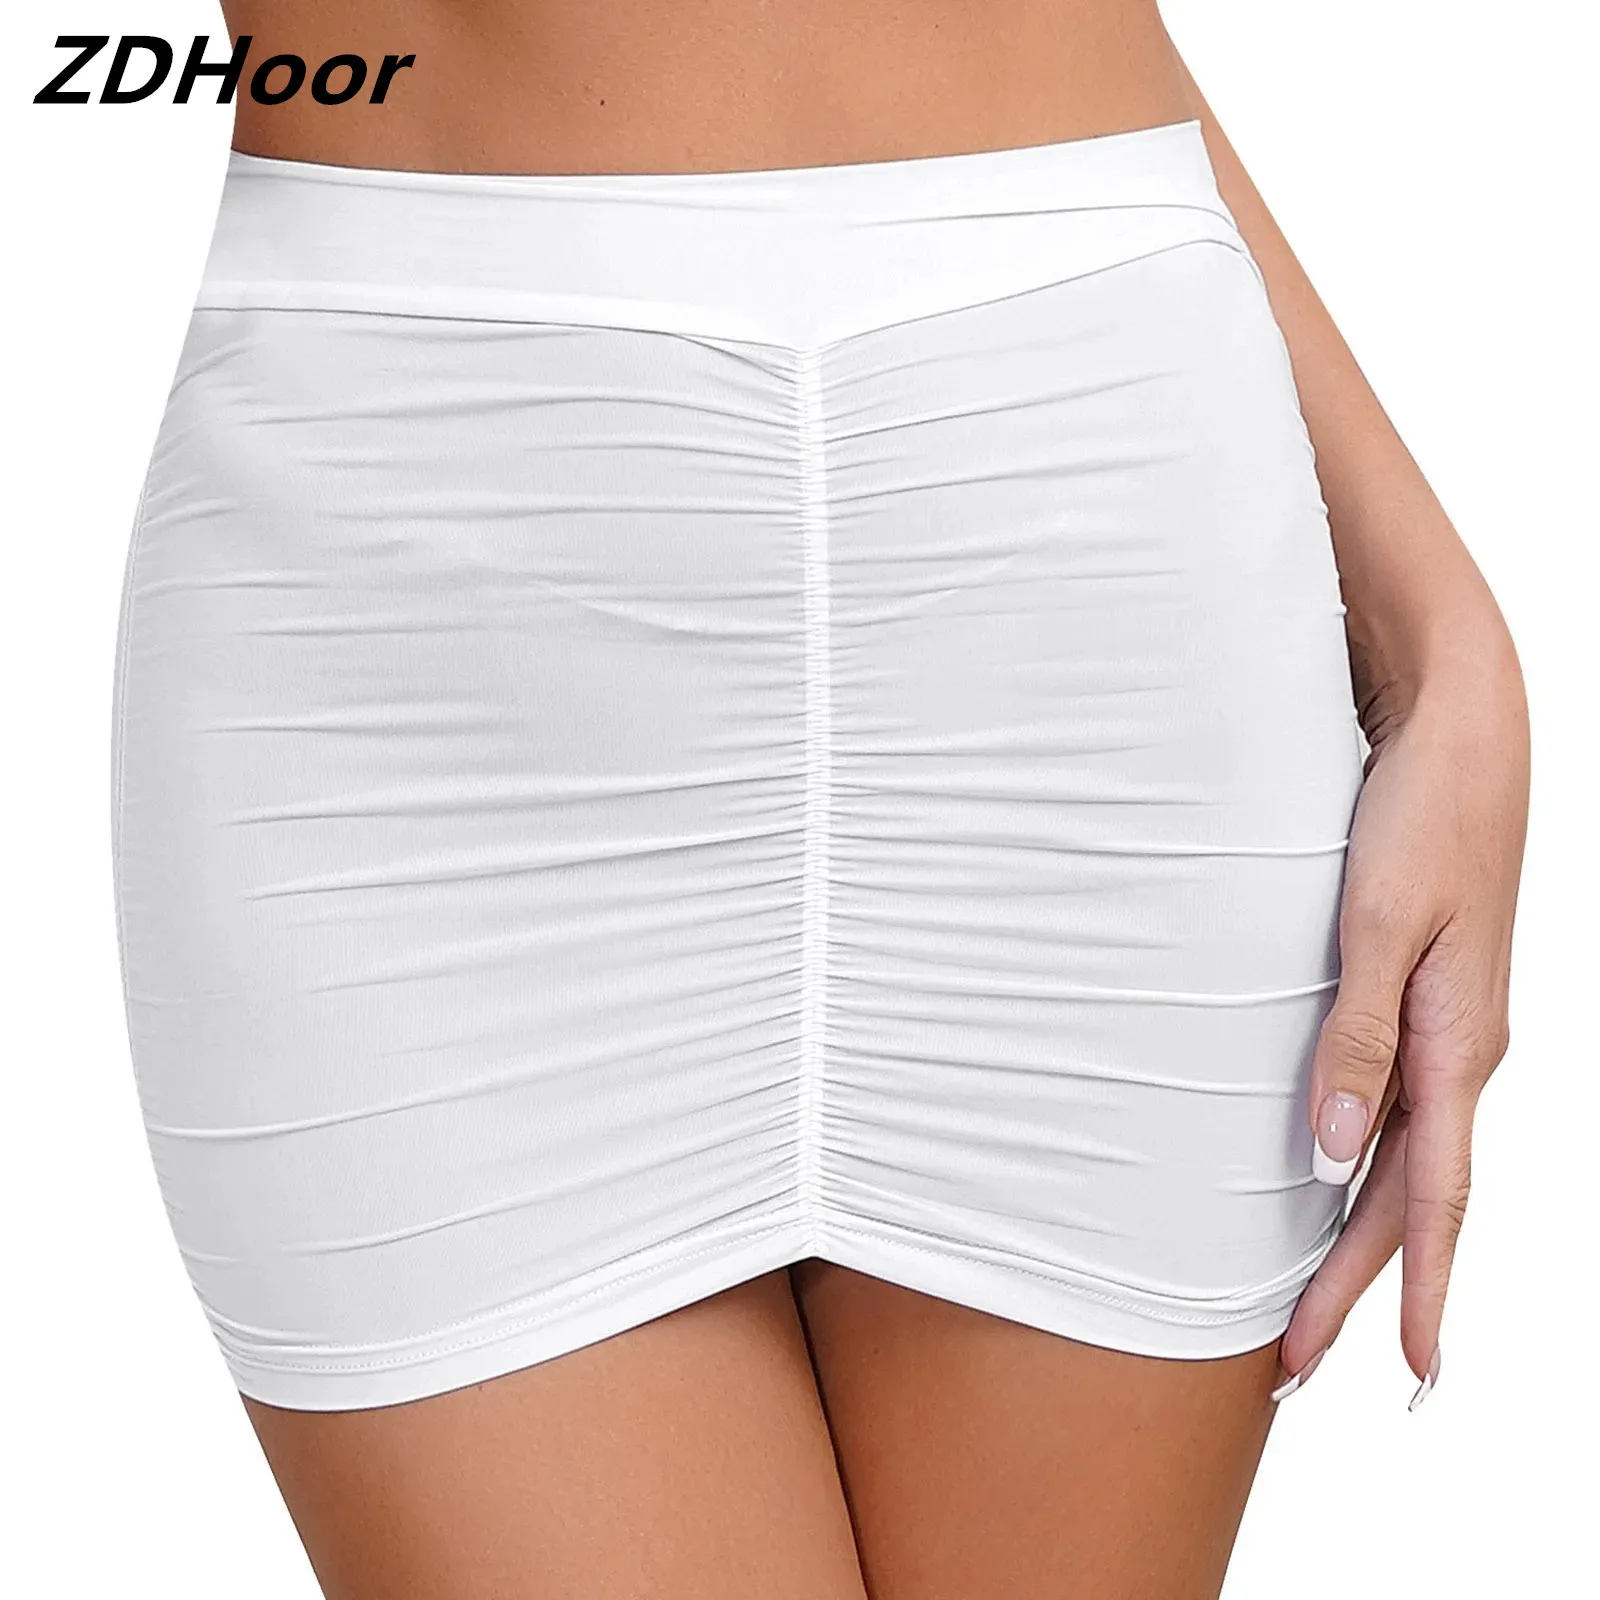 

Womens Tempting Bodycon Mini Skirt Ruched Elastic Bands Semi-Sheer Skirt Hip Wrap Lingerie Skirt for Nightclub Nightwear